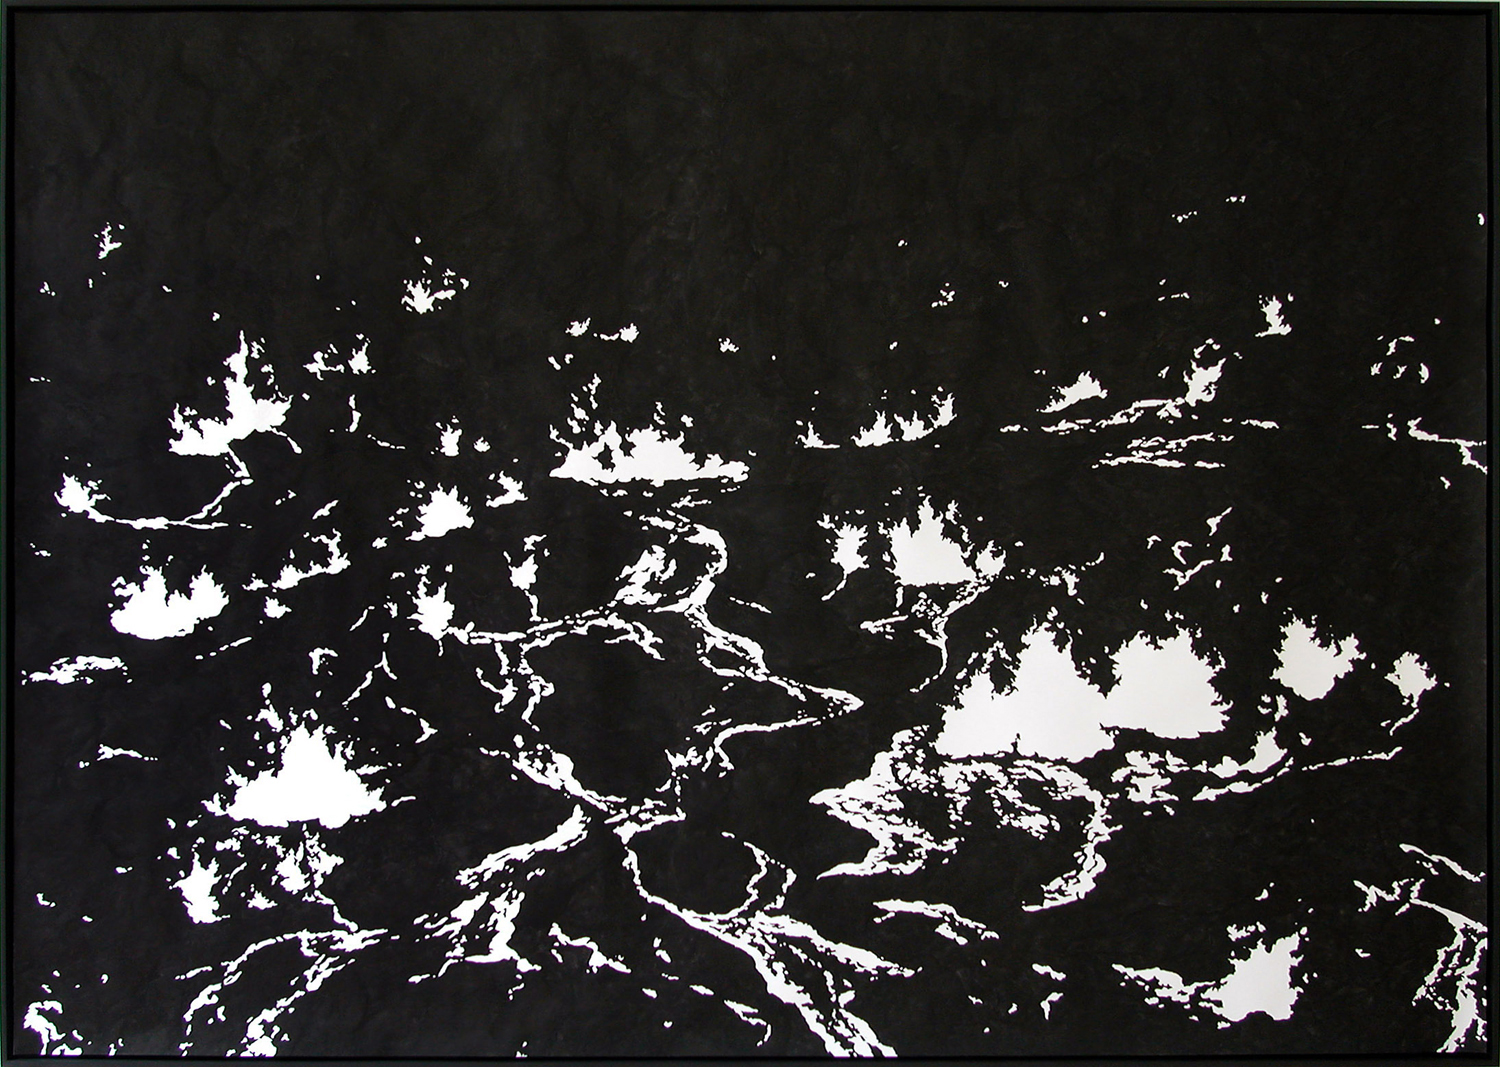   ground ll,  2004, ink on paper, 196 x 276cm 